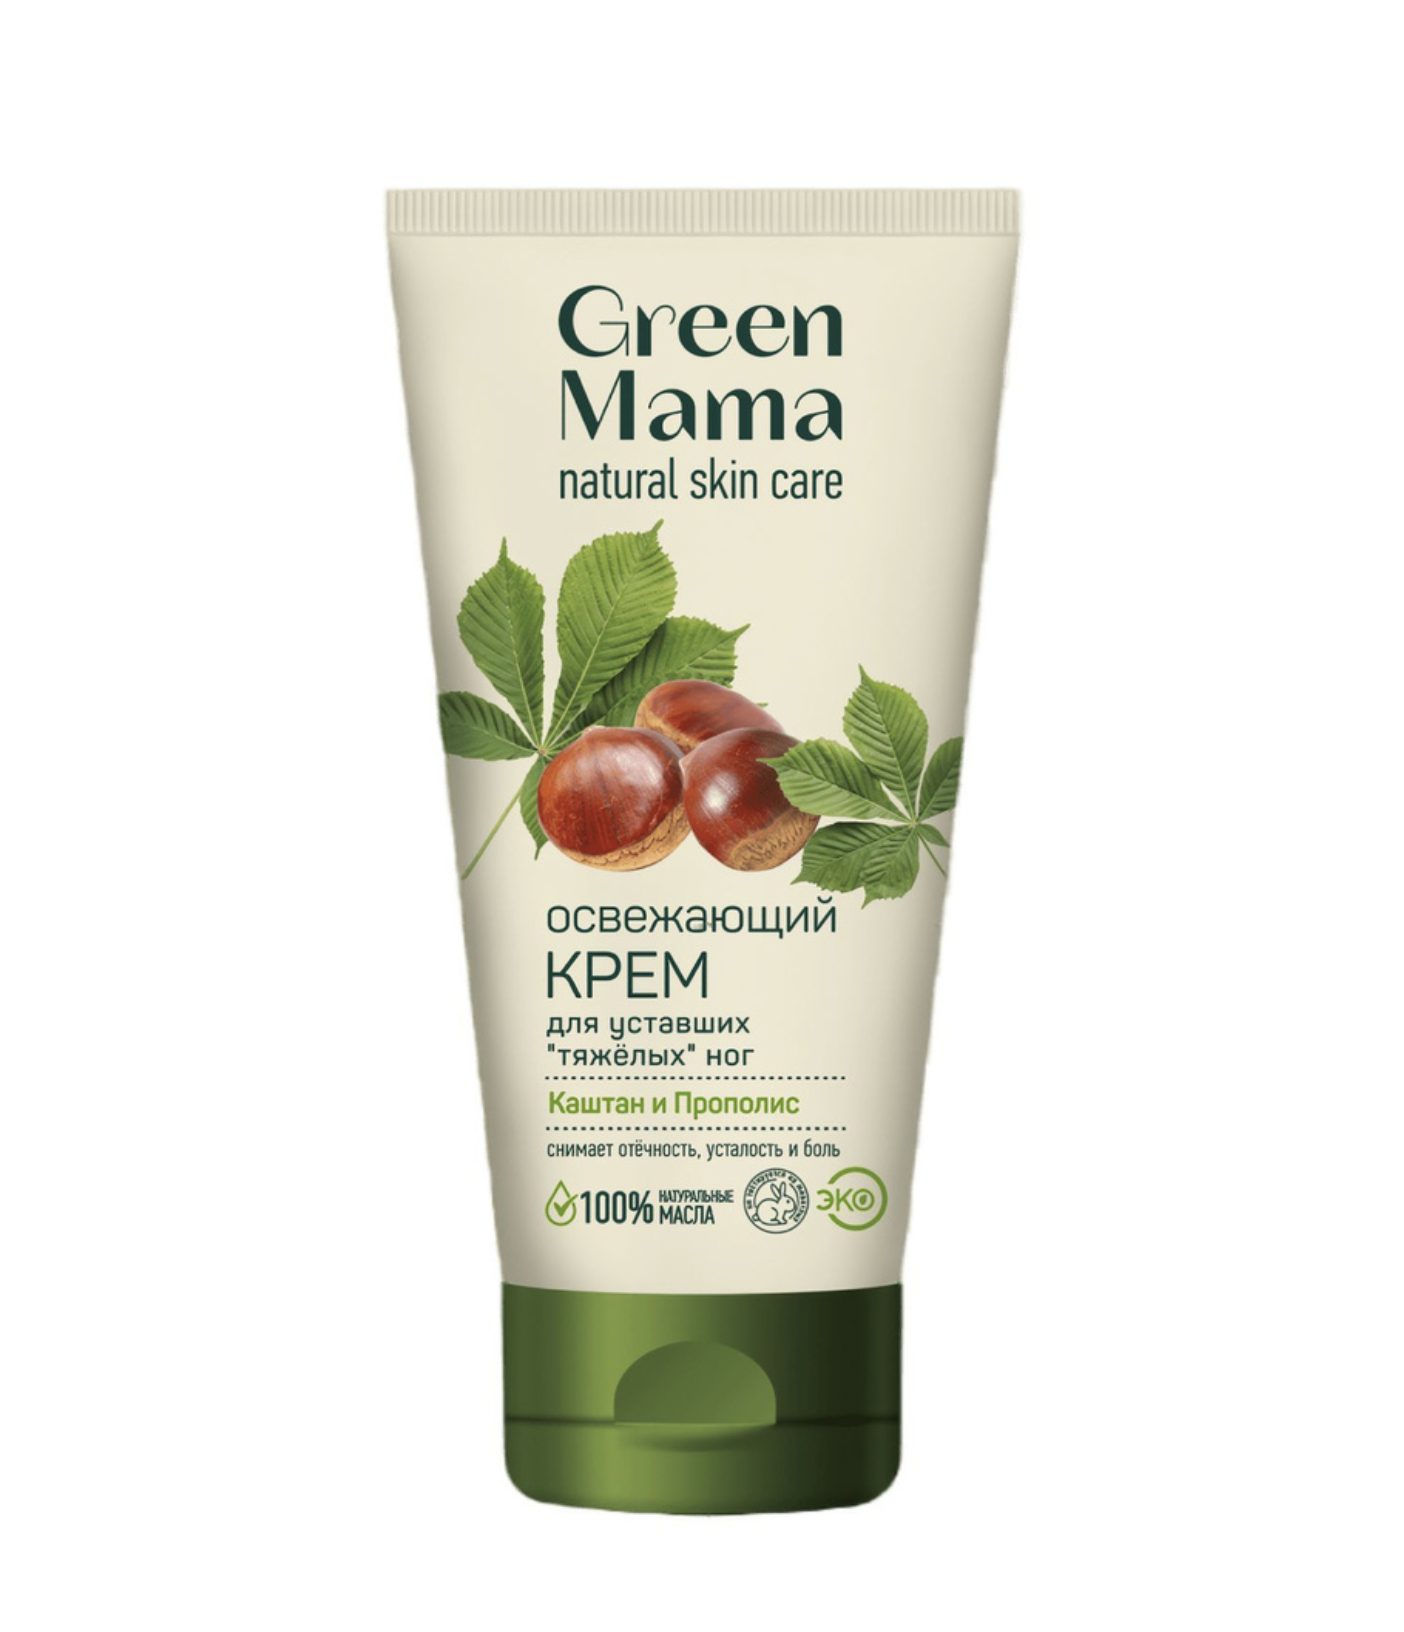    / Green Mama -          170 